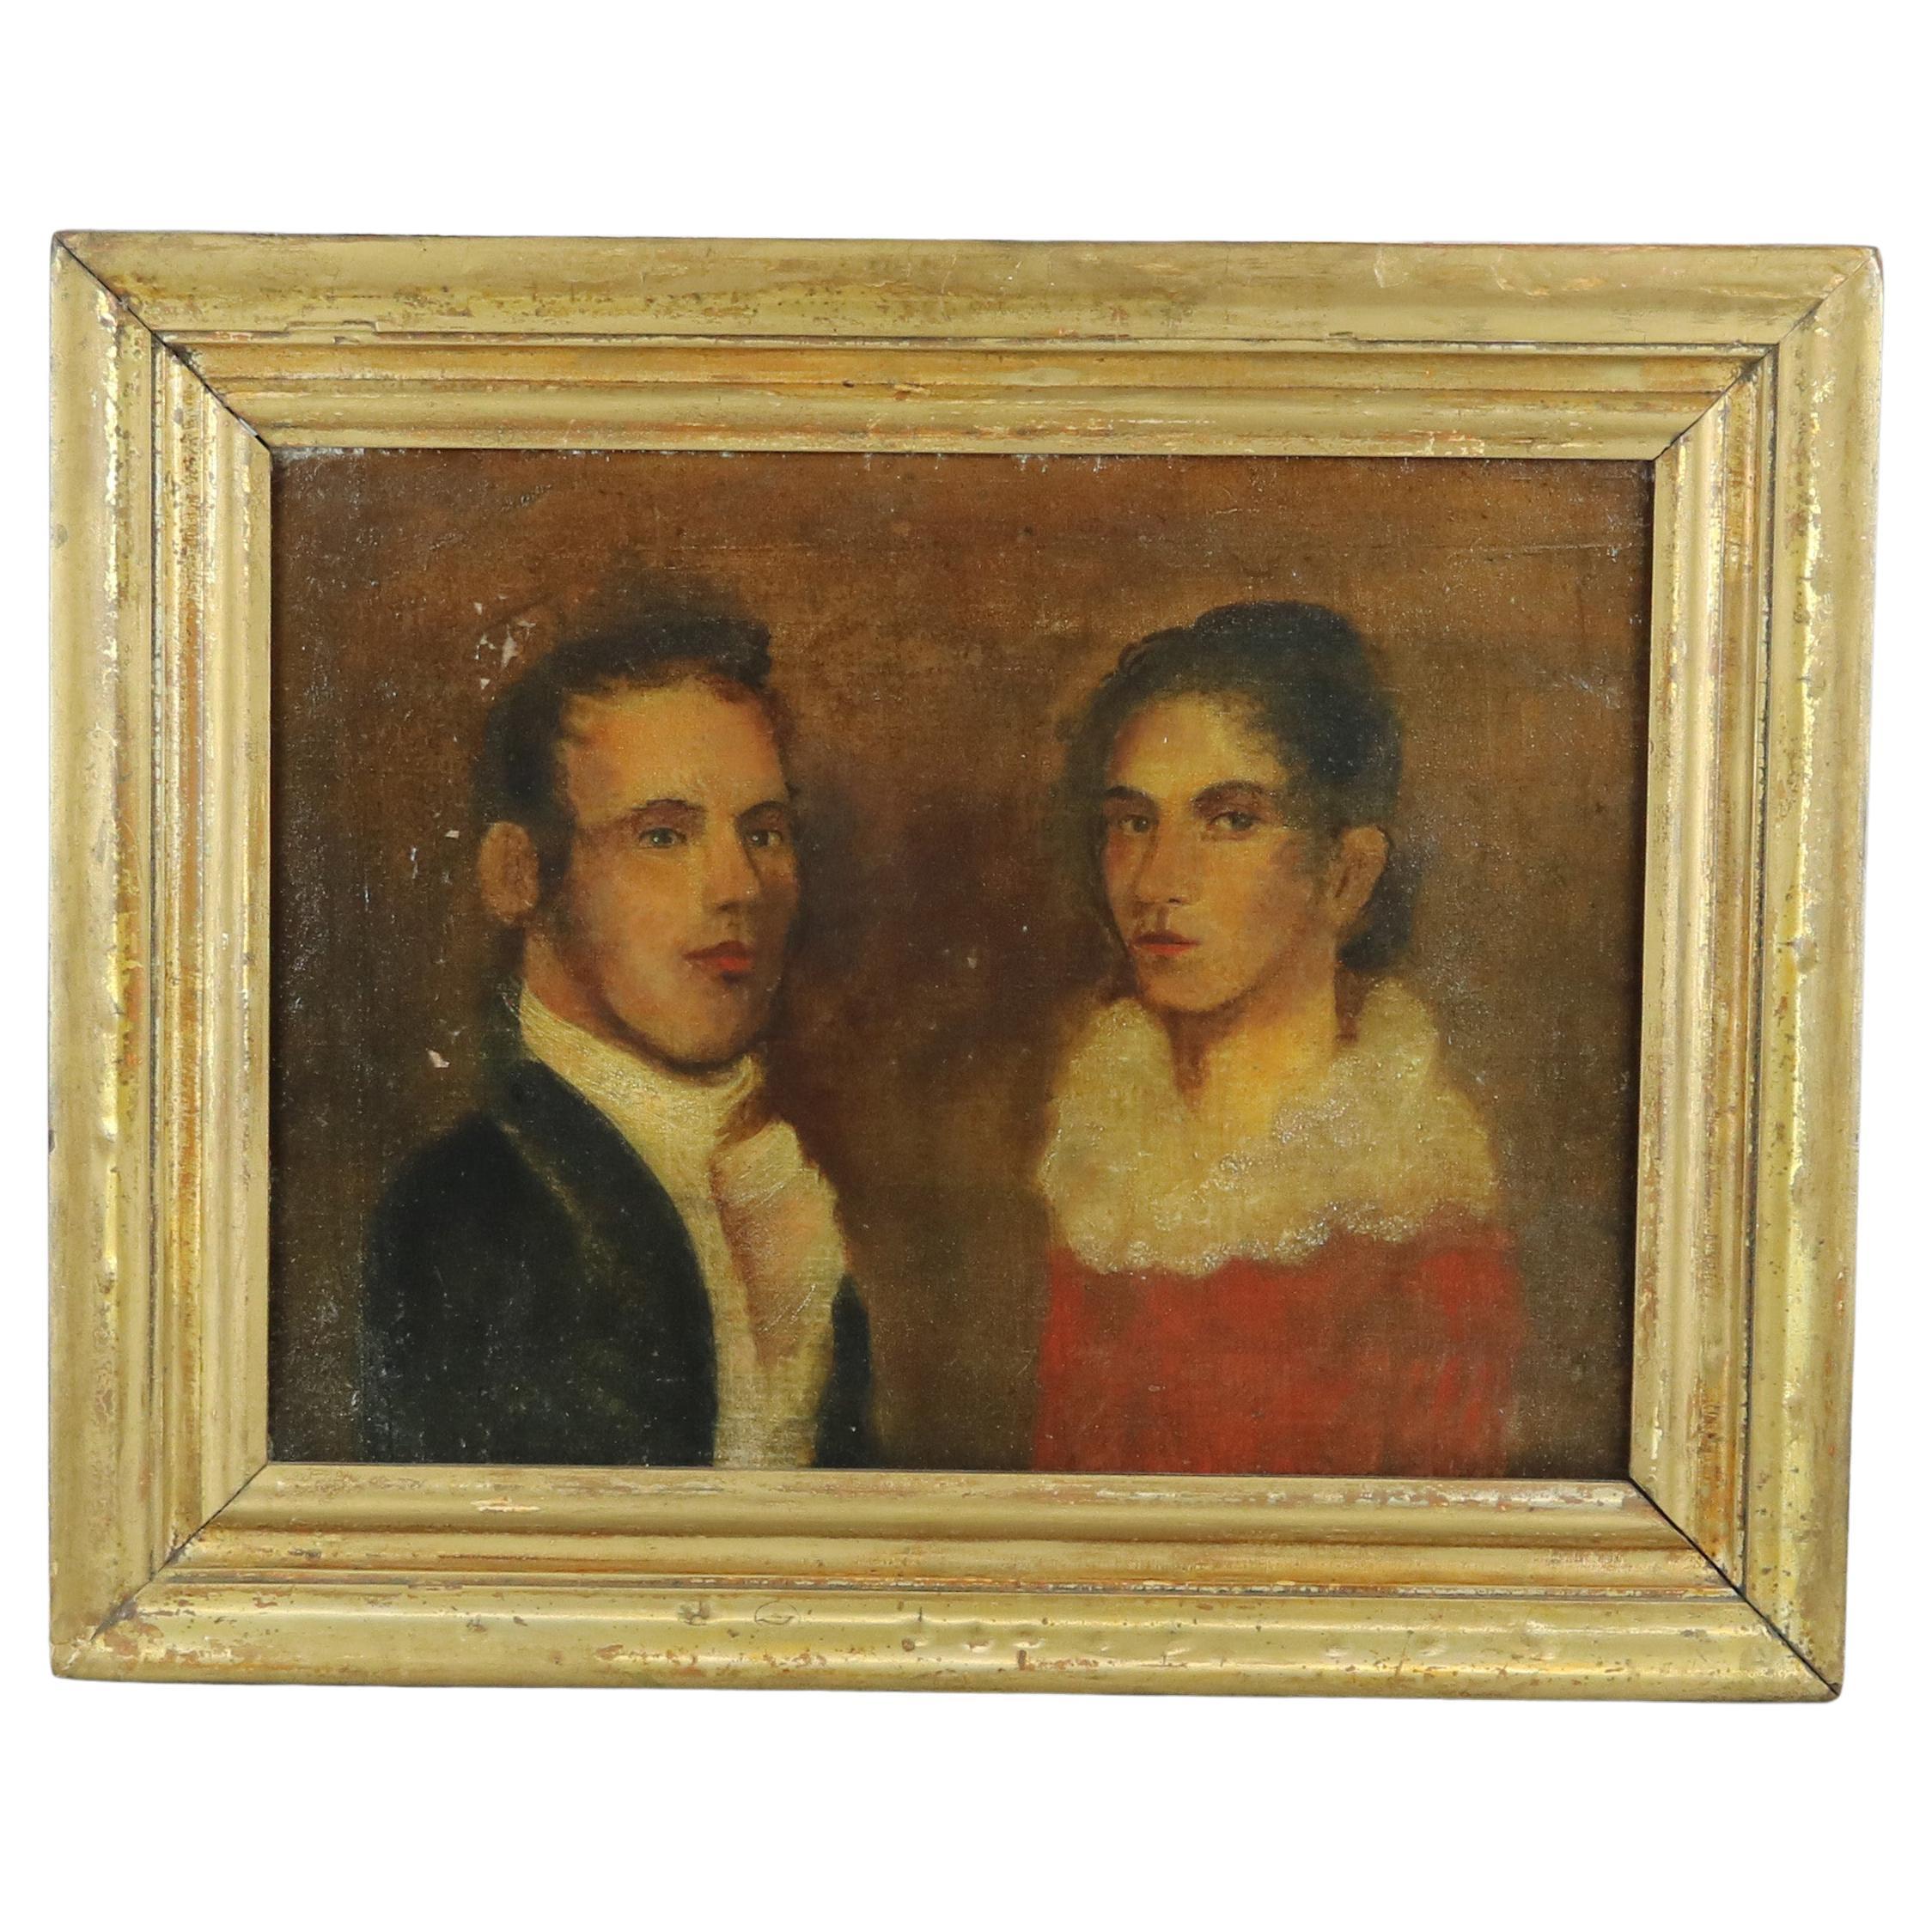 Antique Painting Portrait of a Lady & Gentleman Couple by Joshua Johnson, c1840